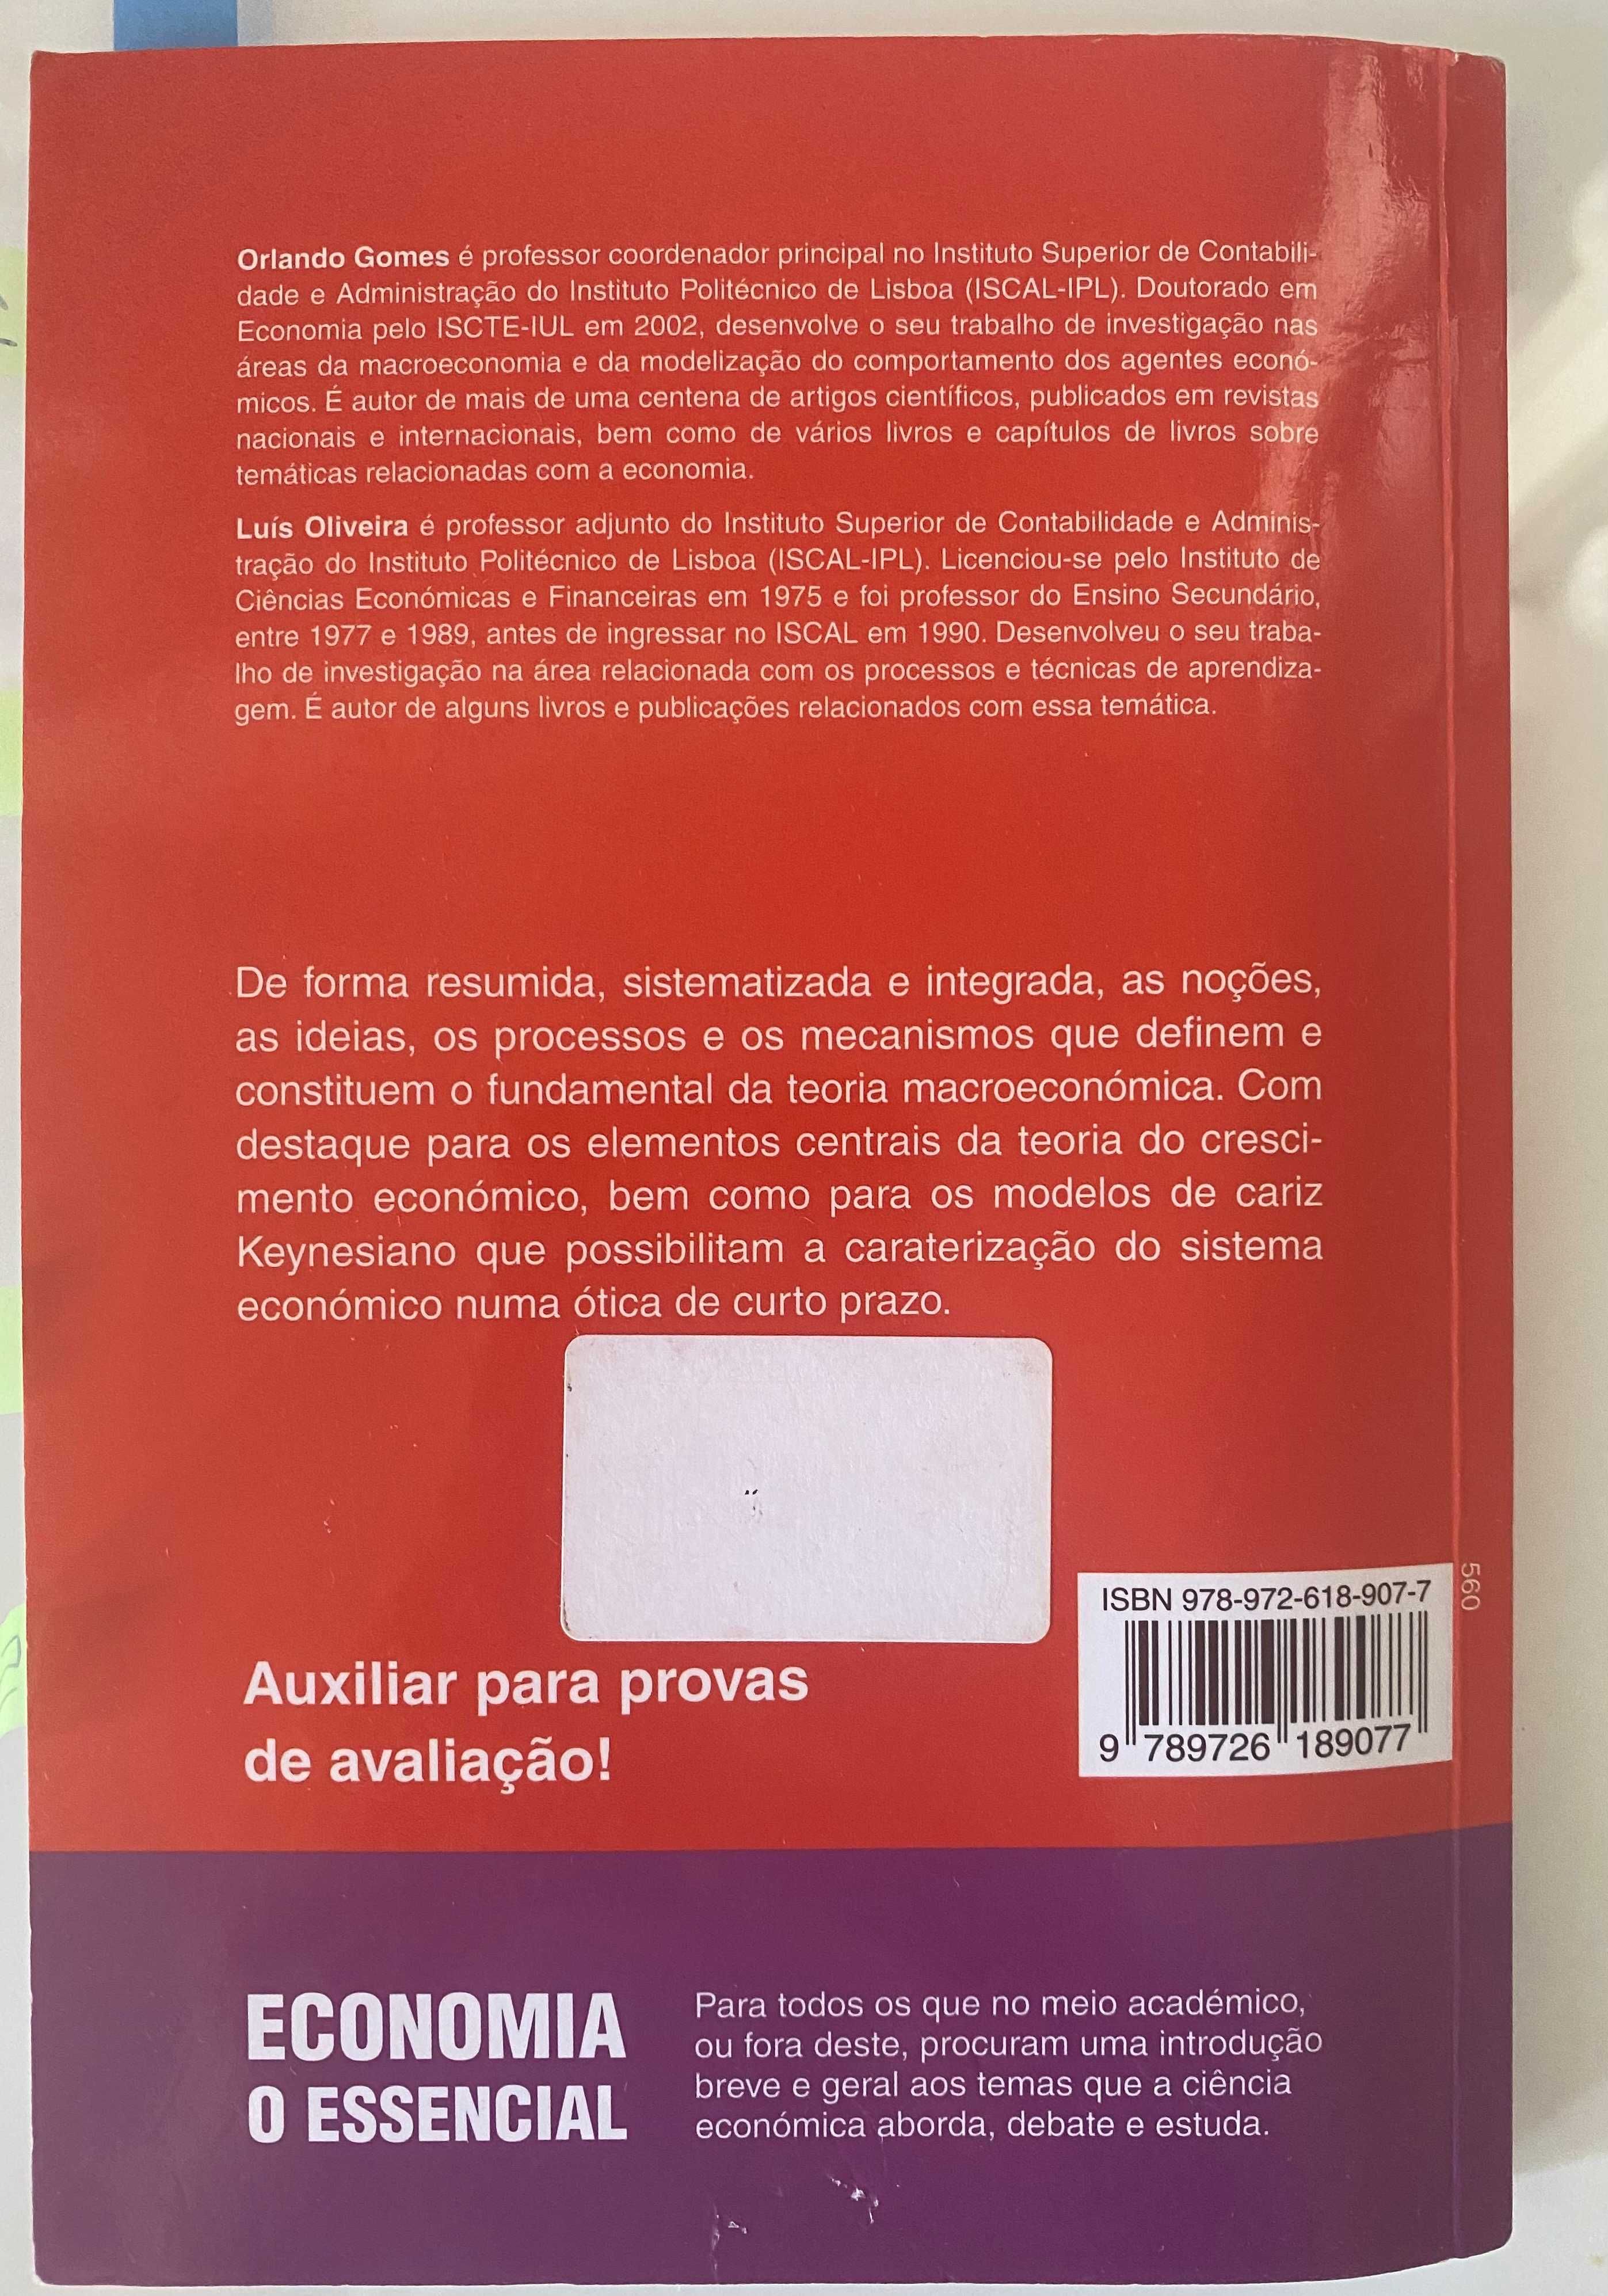 Livro Marcroeconomia, Orlando Gomes, Luís Oliveira